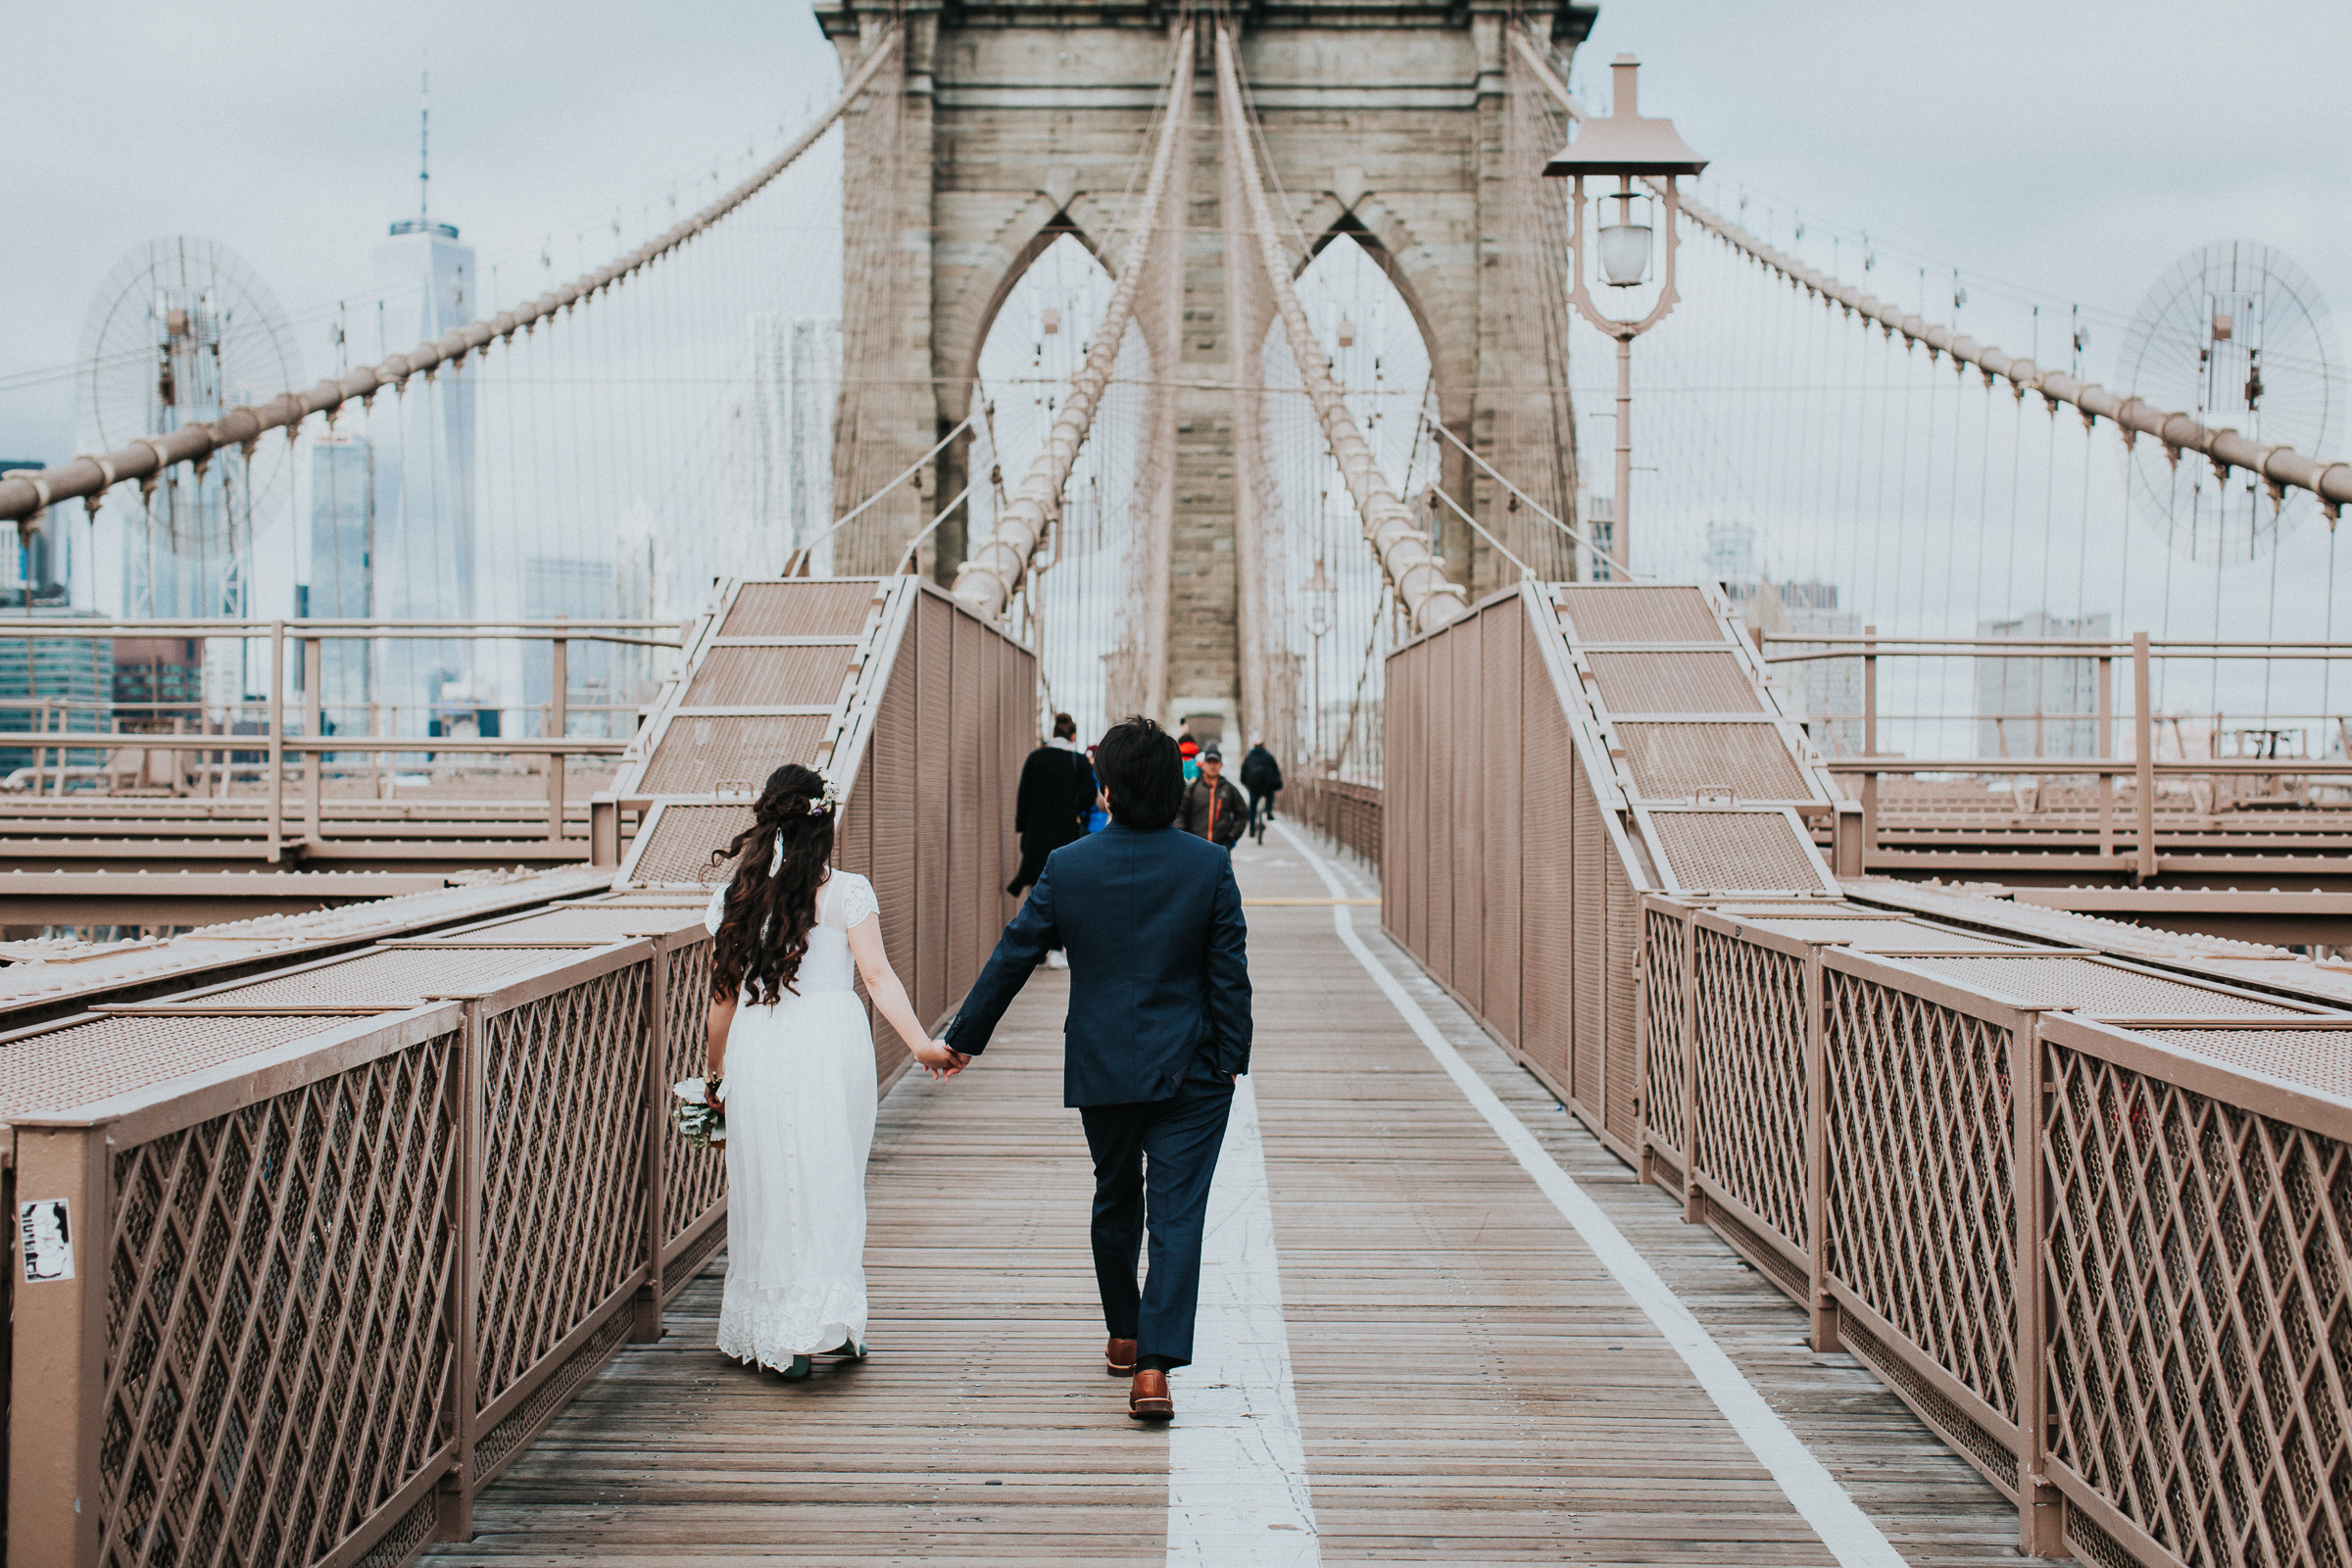 Central-Park-Brooklyn-Bridge-Dumbo-NYC-Documentary-Wedding-Photographer-27.jpg